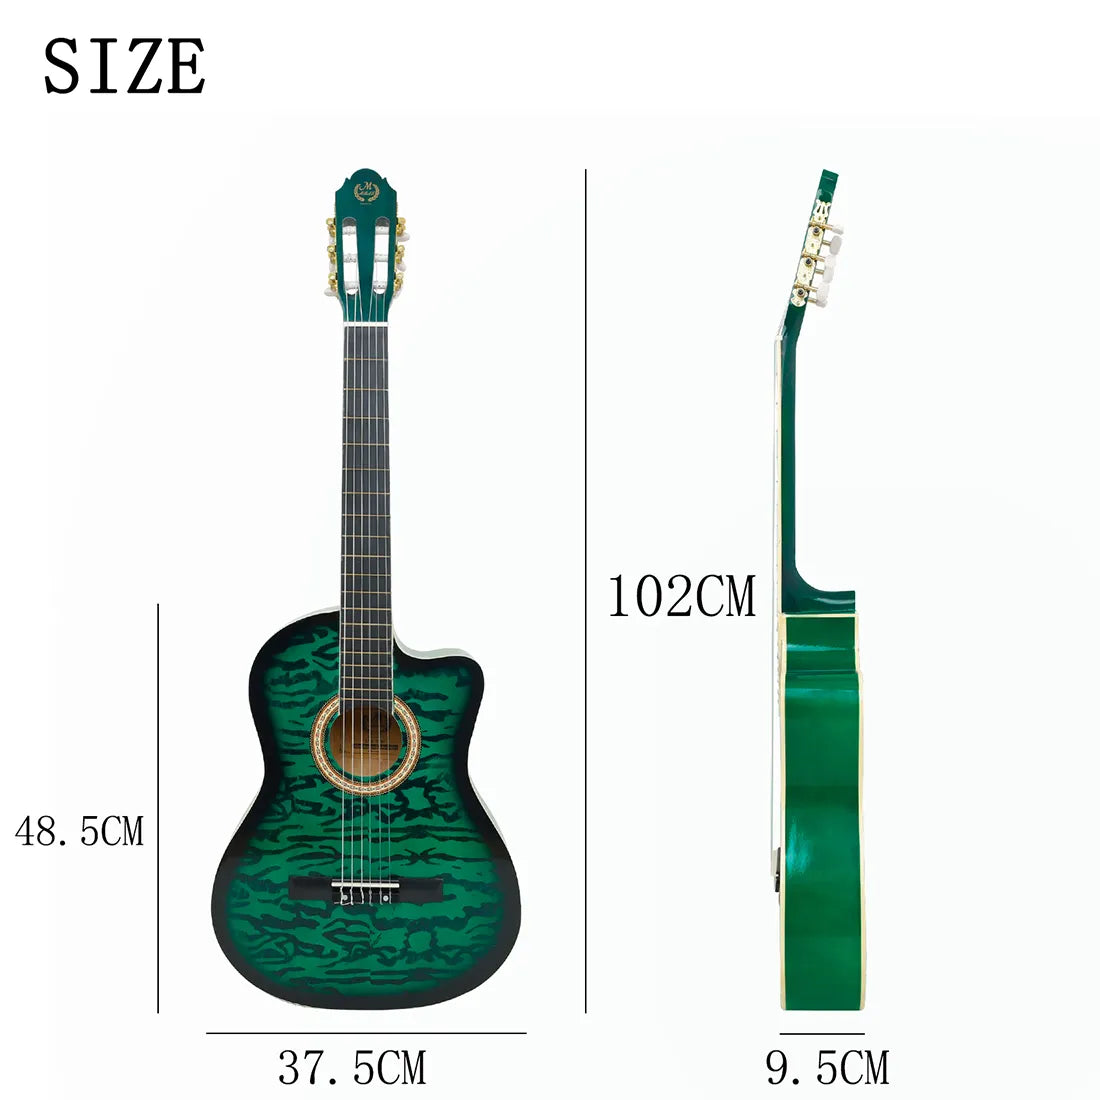 M MBAT גיטרה קלאסית 39 אינץ' 6 מיתרים  הטופ אשוחית  19 פרטים גיטרה אקוסטית גיטרה קלאסית למתחילים.